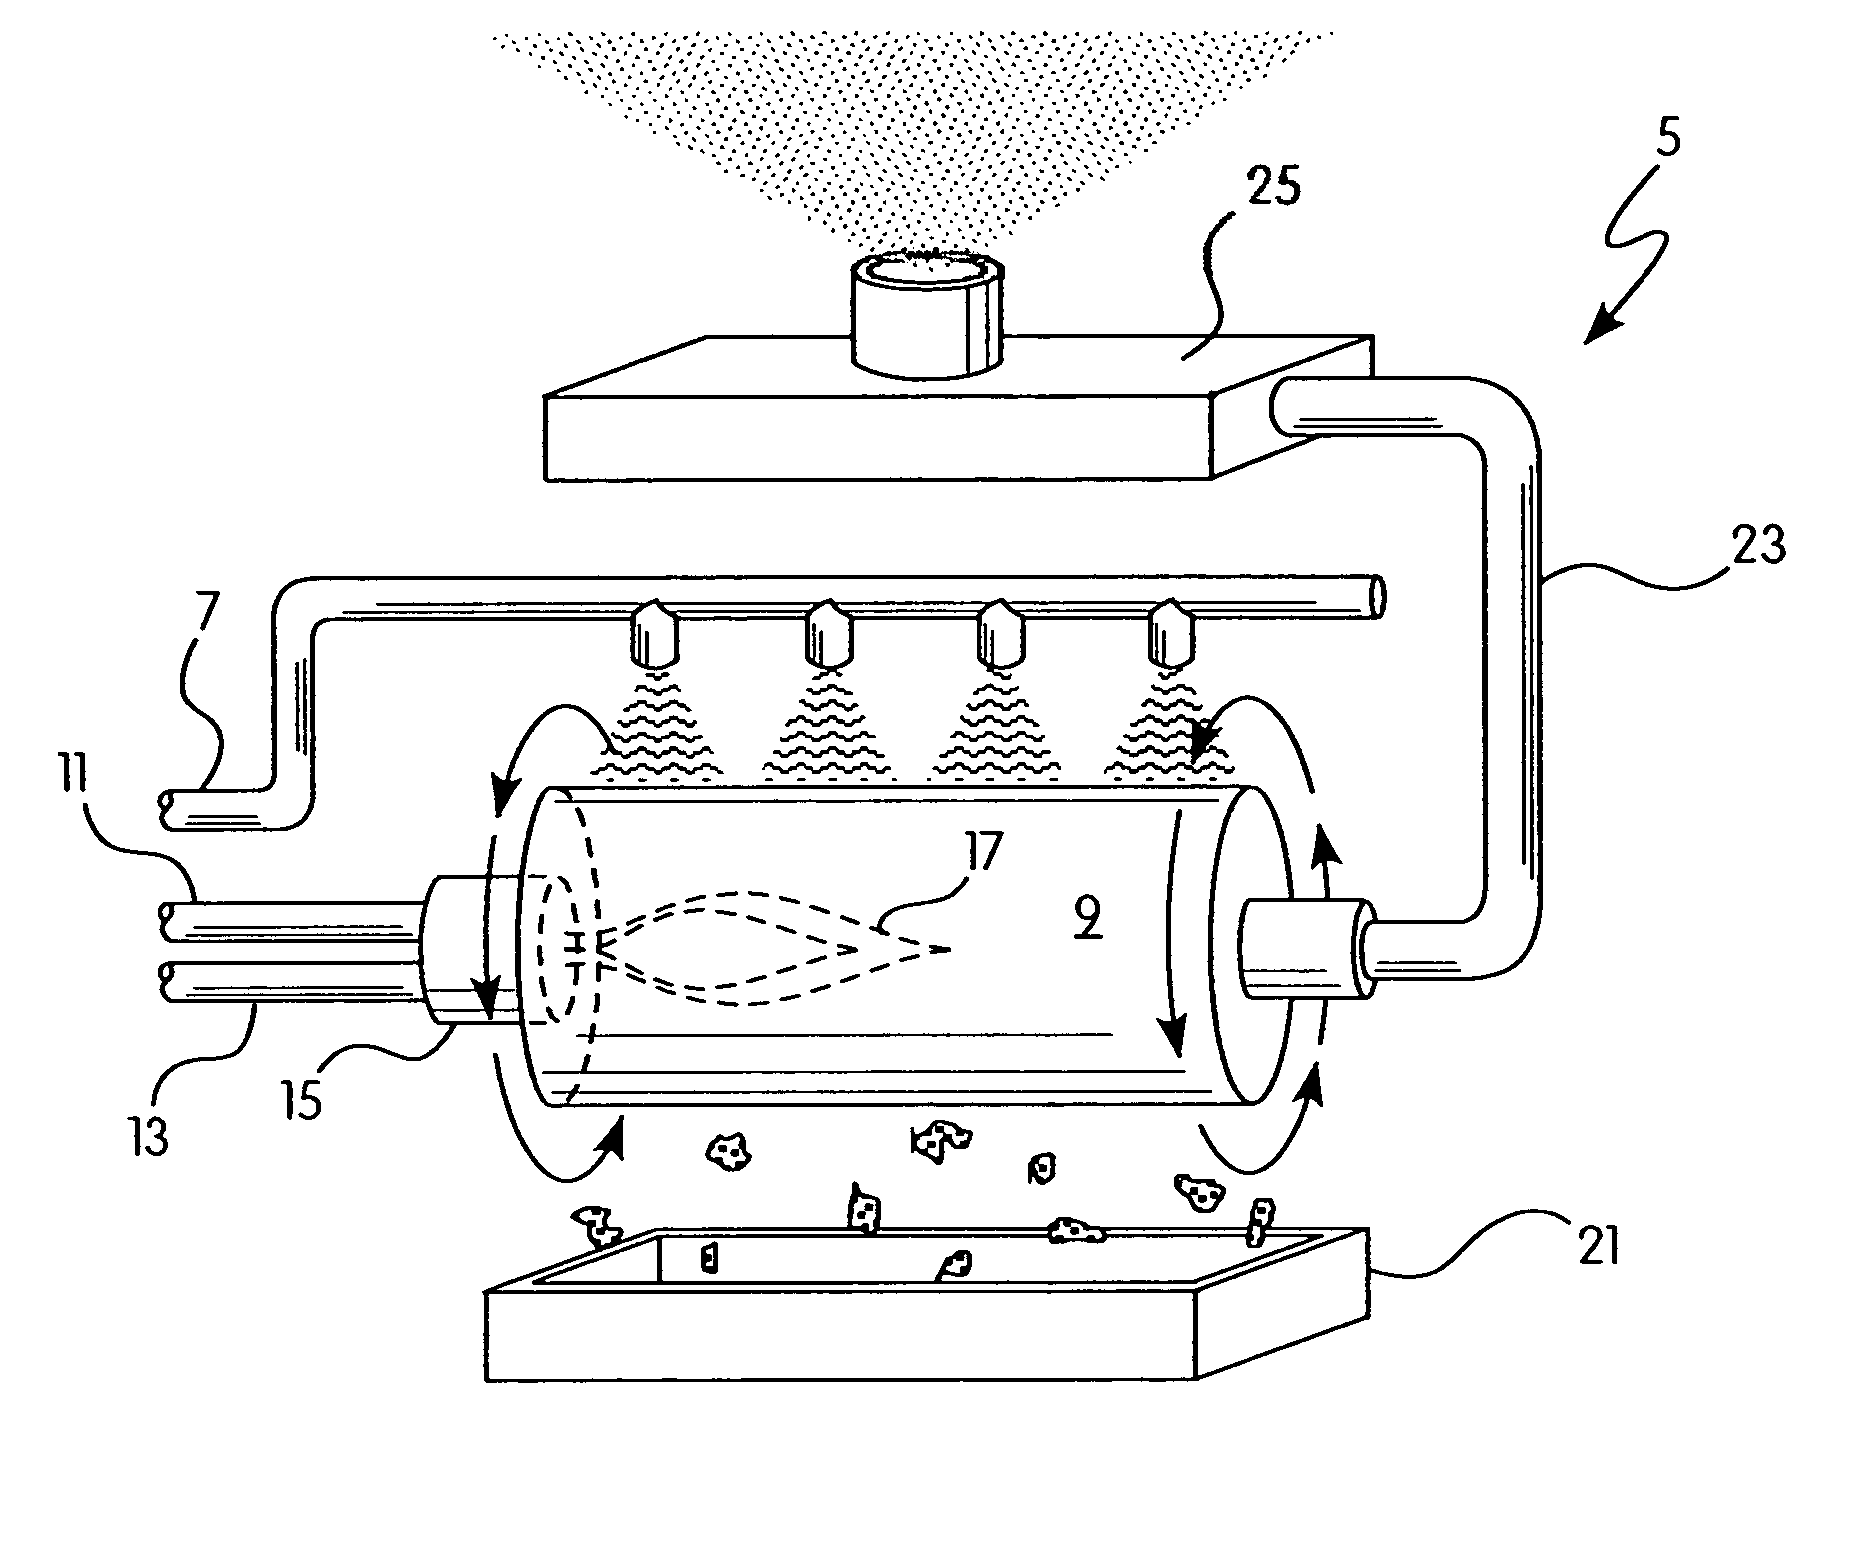 Portable brine evaporator unit, process, and system